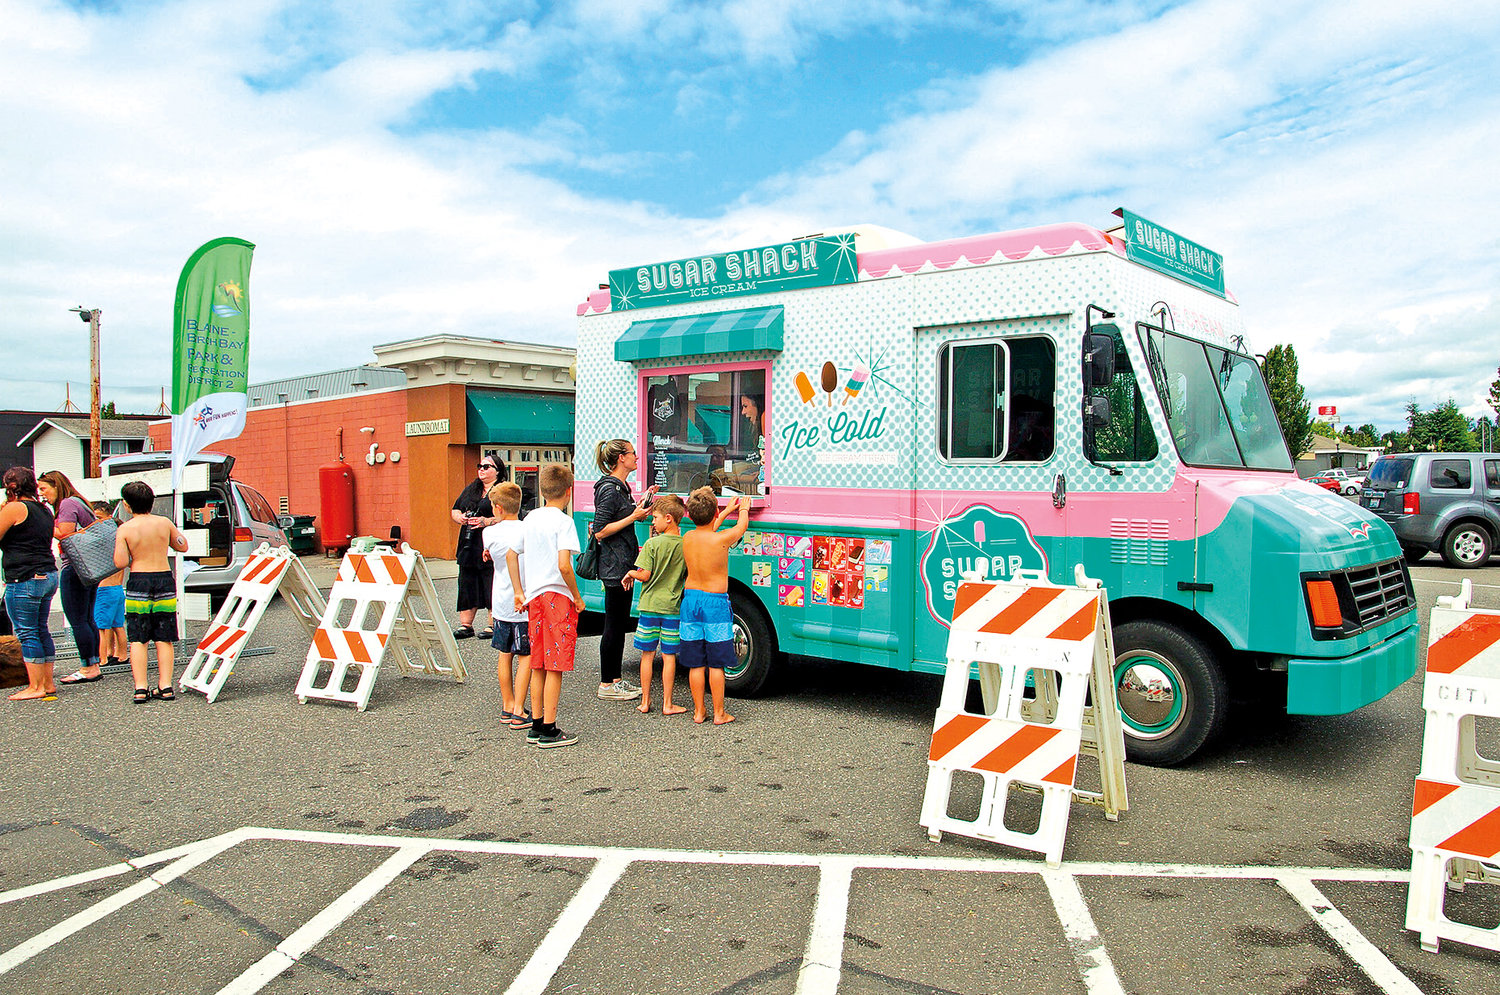 Families visit the Sugar Shack ice cream truck for frozen treats during Splash Days.